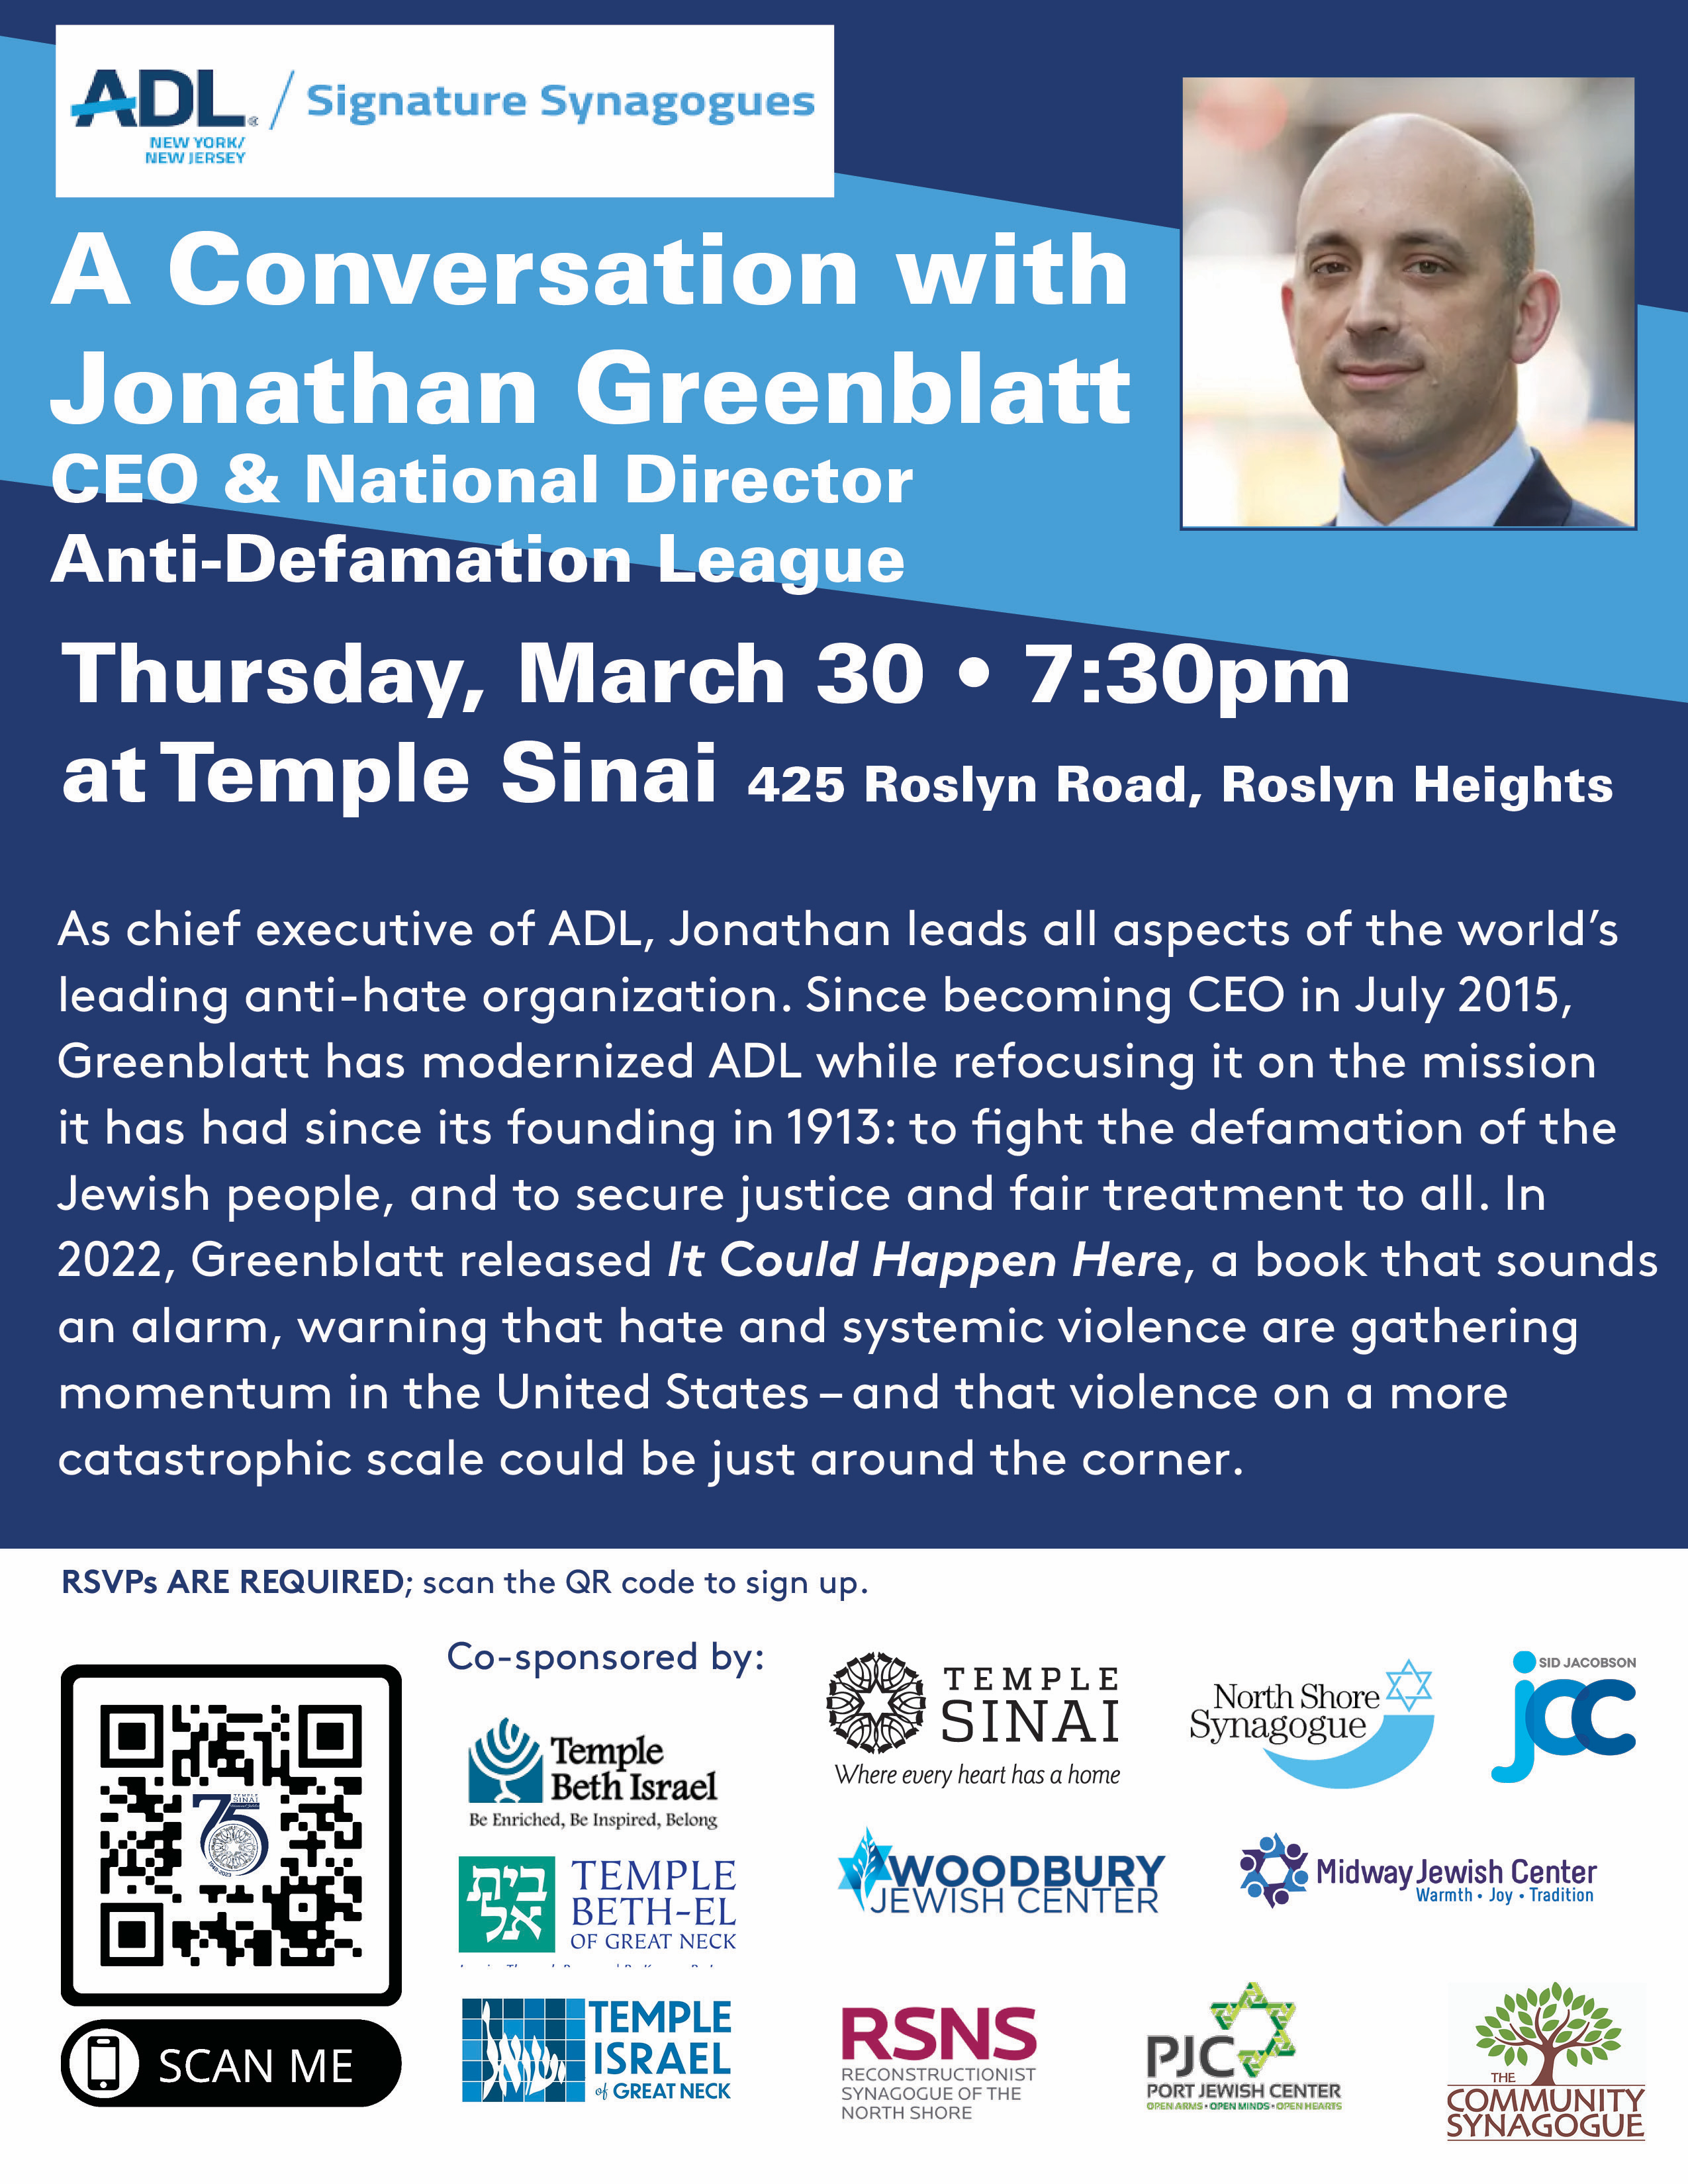 ADL Event: A Conversation with Jonathan Greenblatt